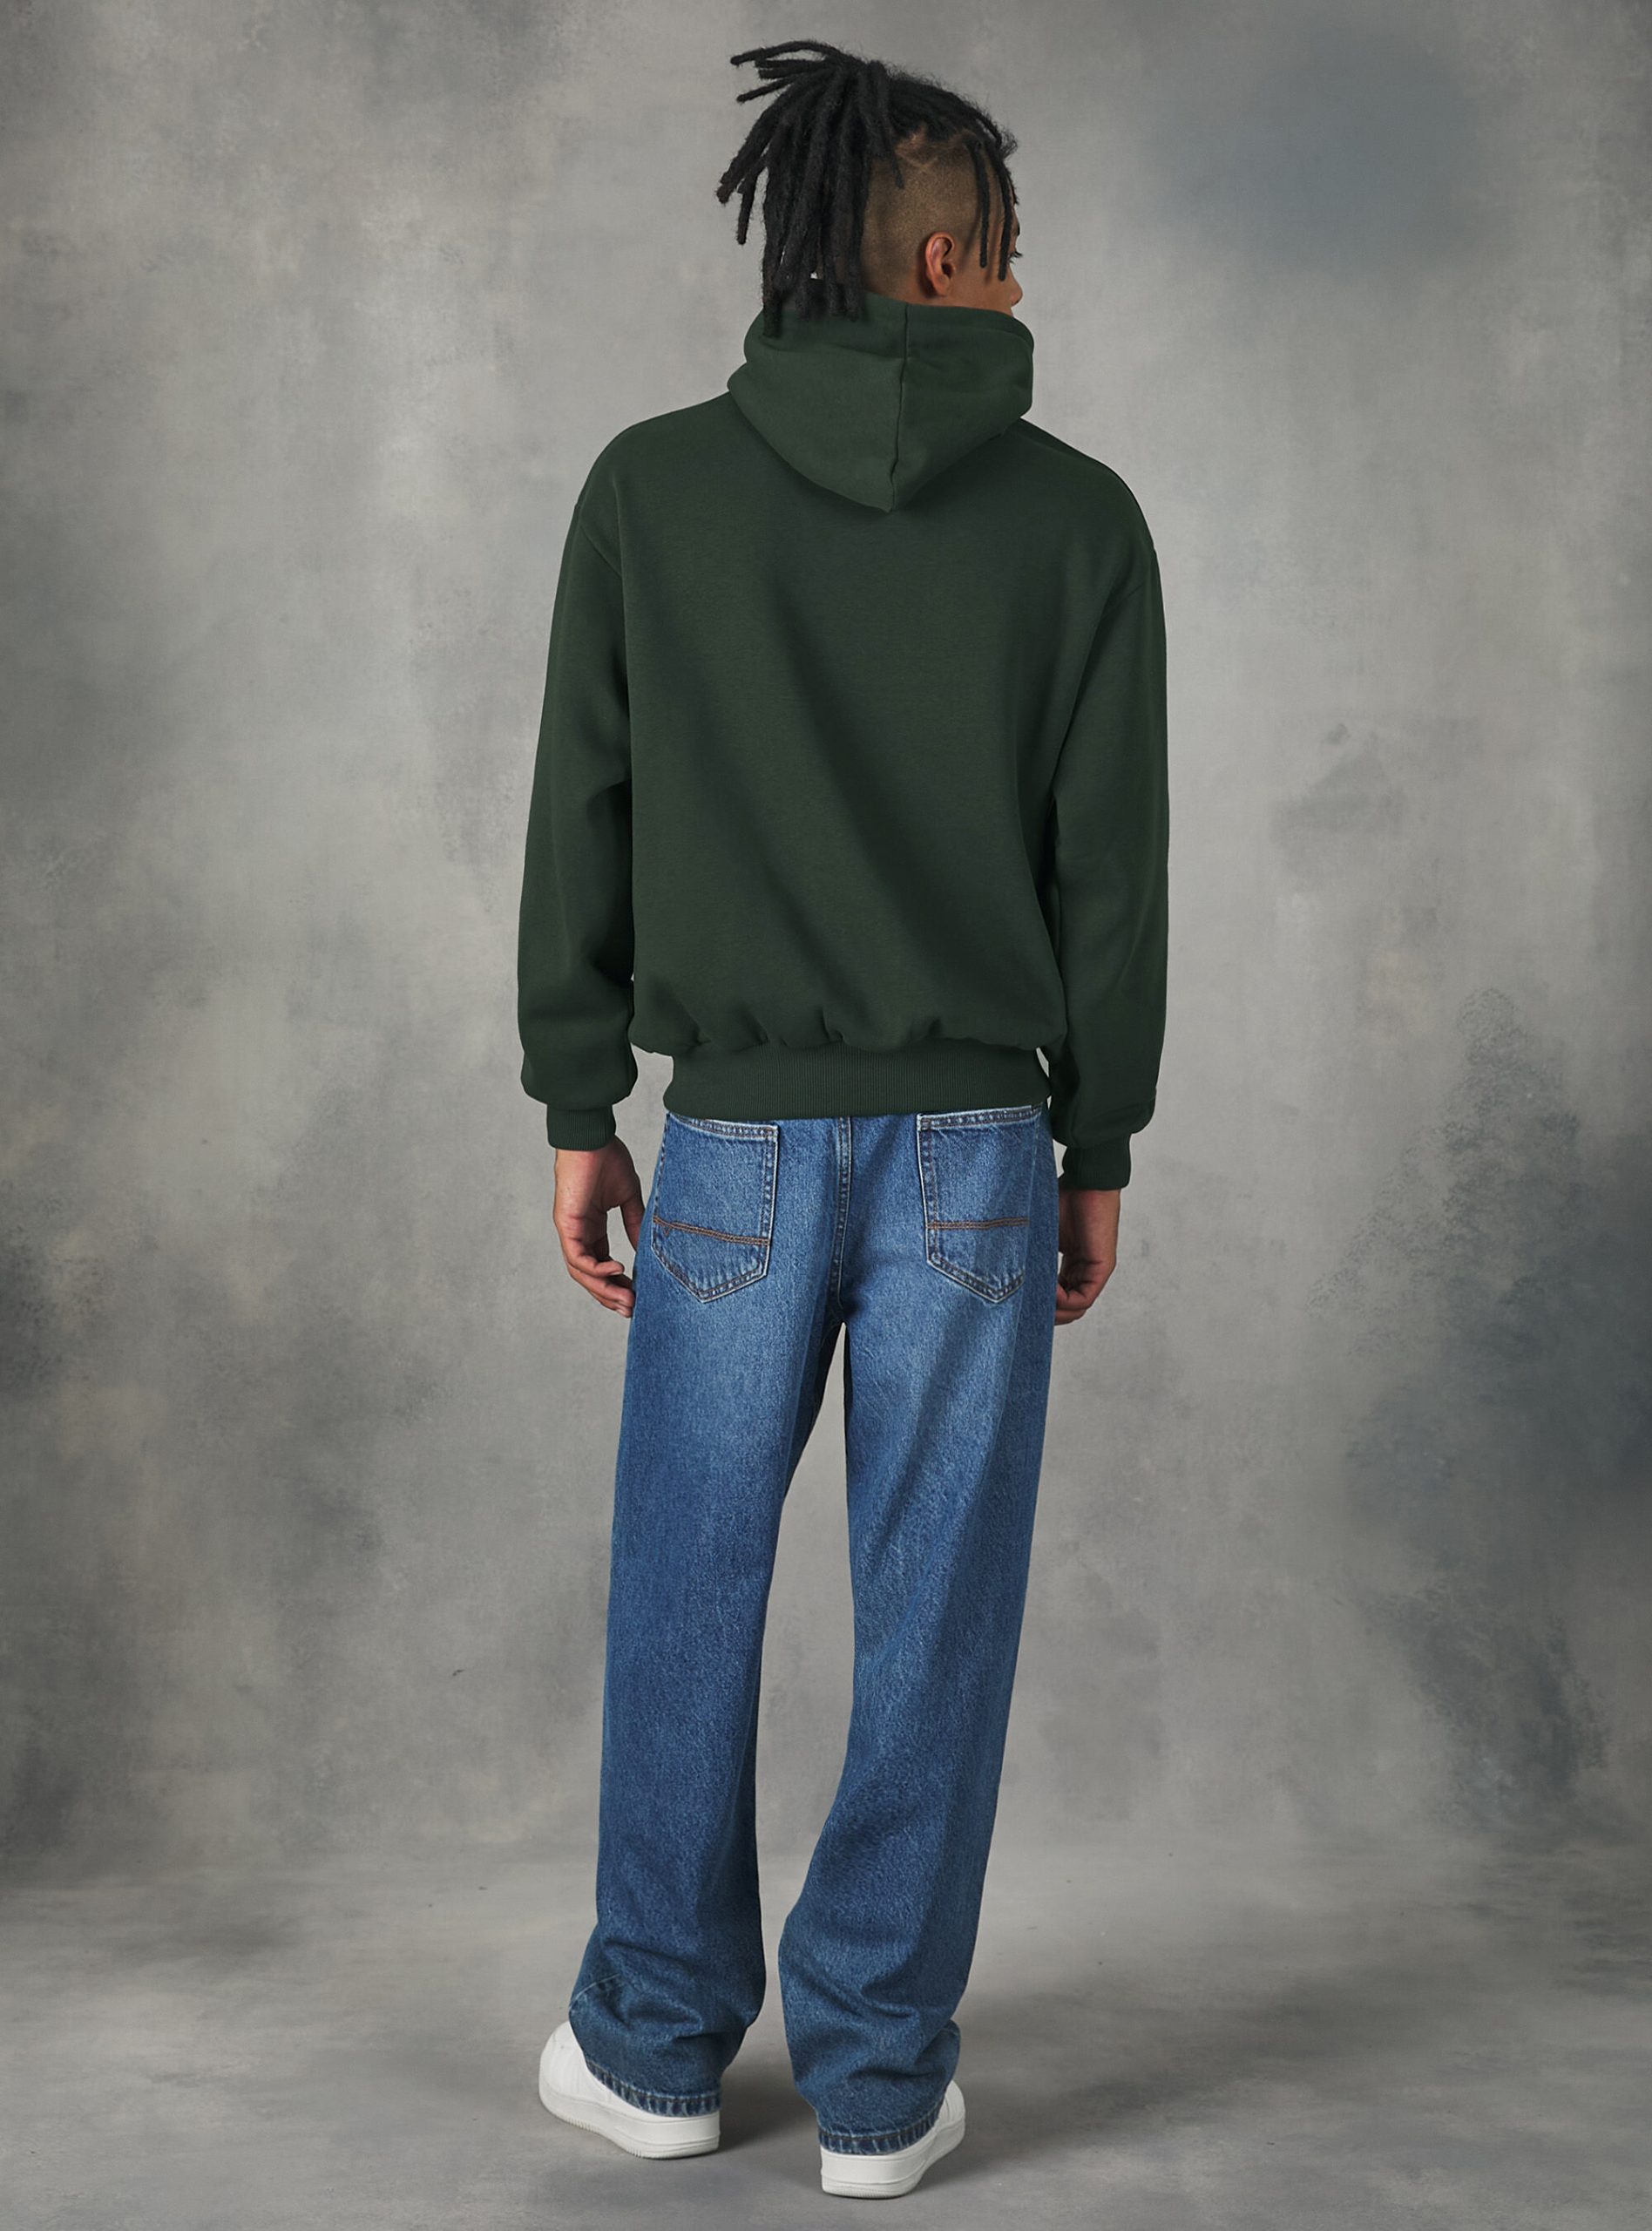 Männer Gn1 Green Dark Boxy Fit Sweatshirt Mit Kapuze Alcott Sweatshirts Modell – 2